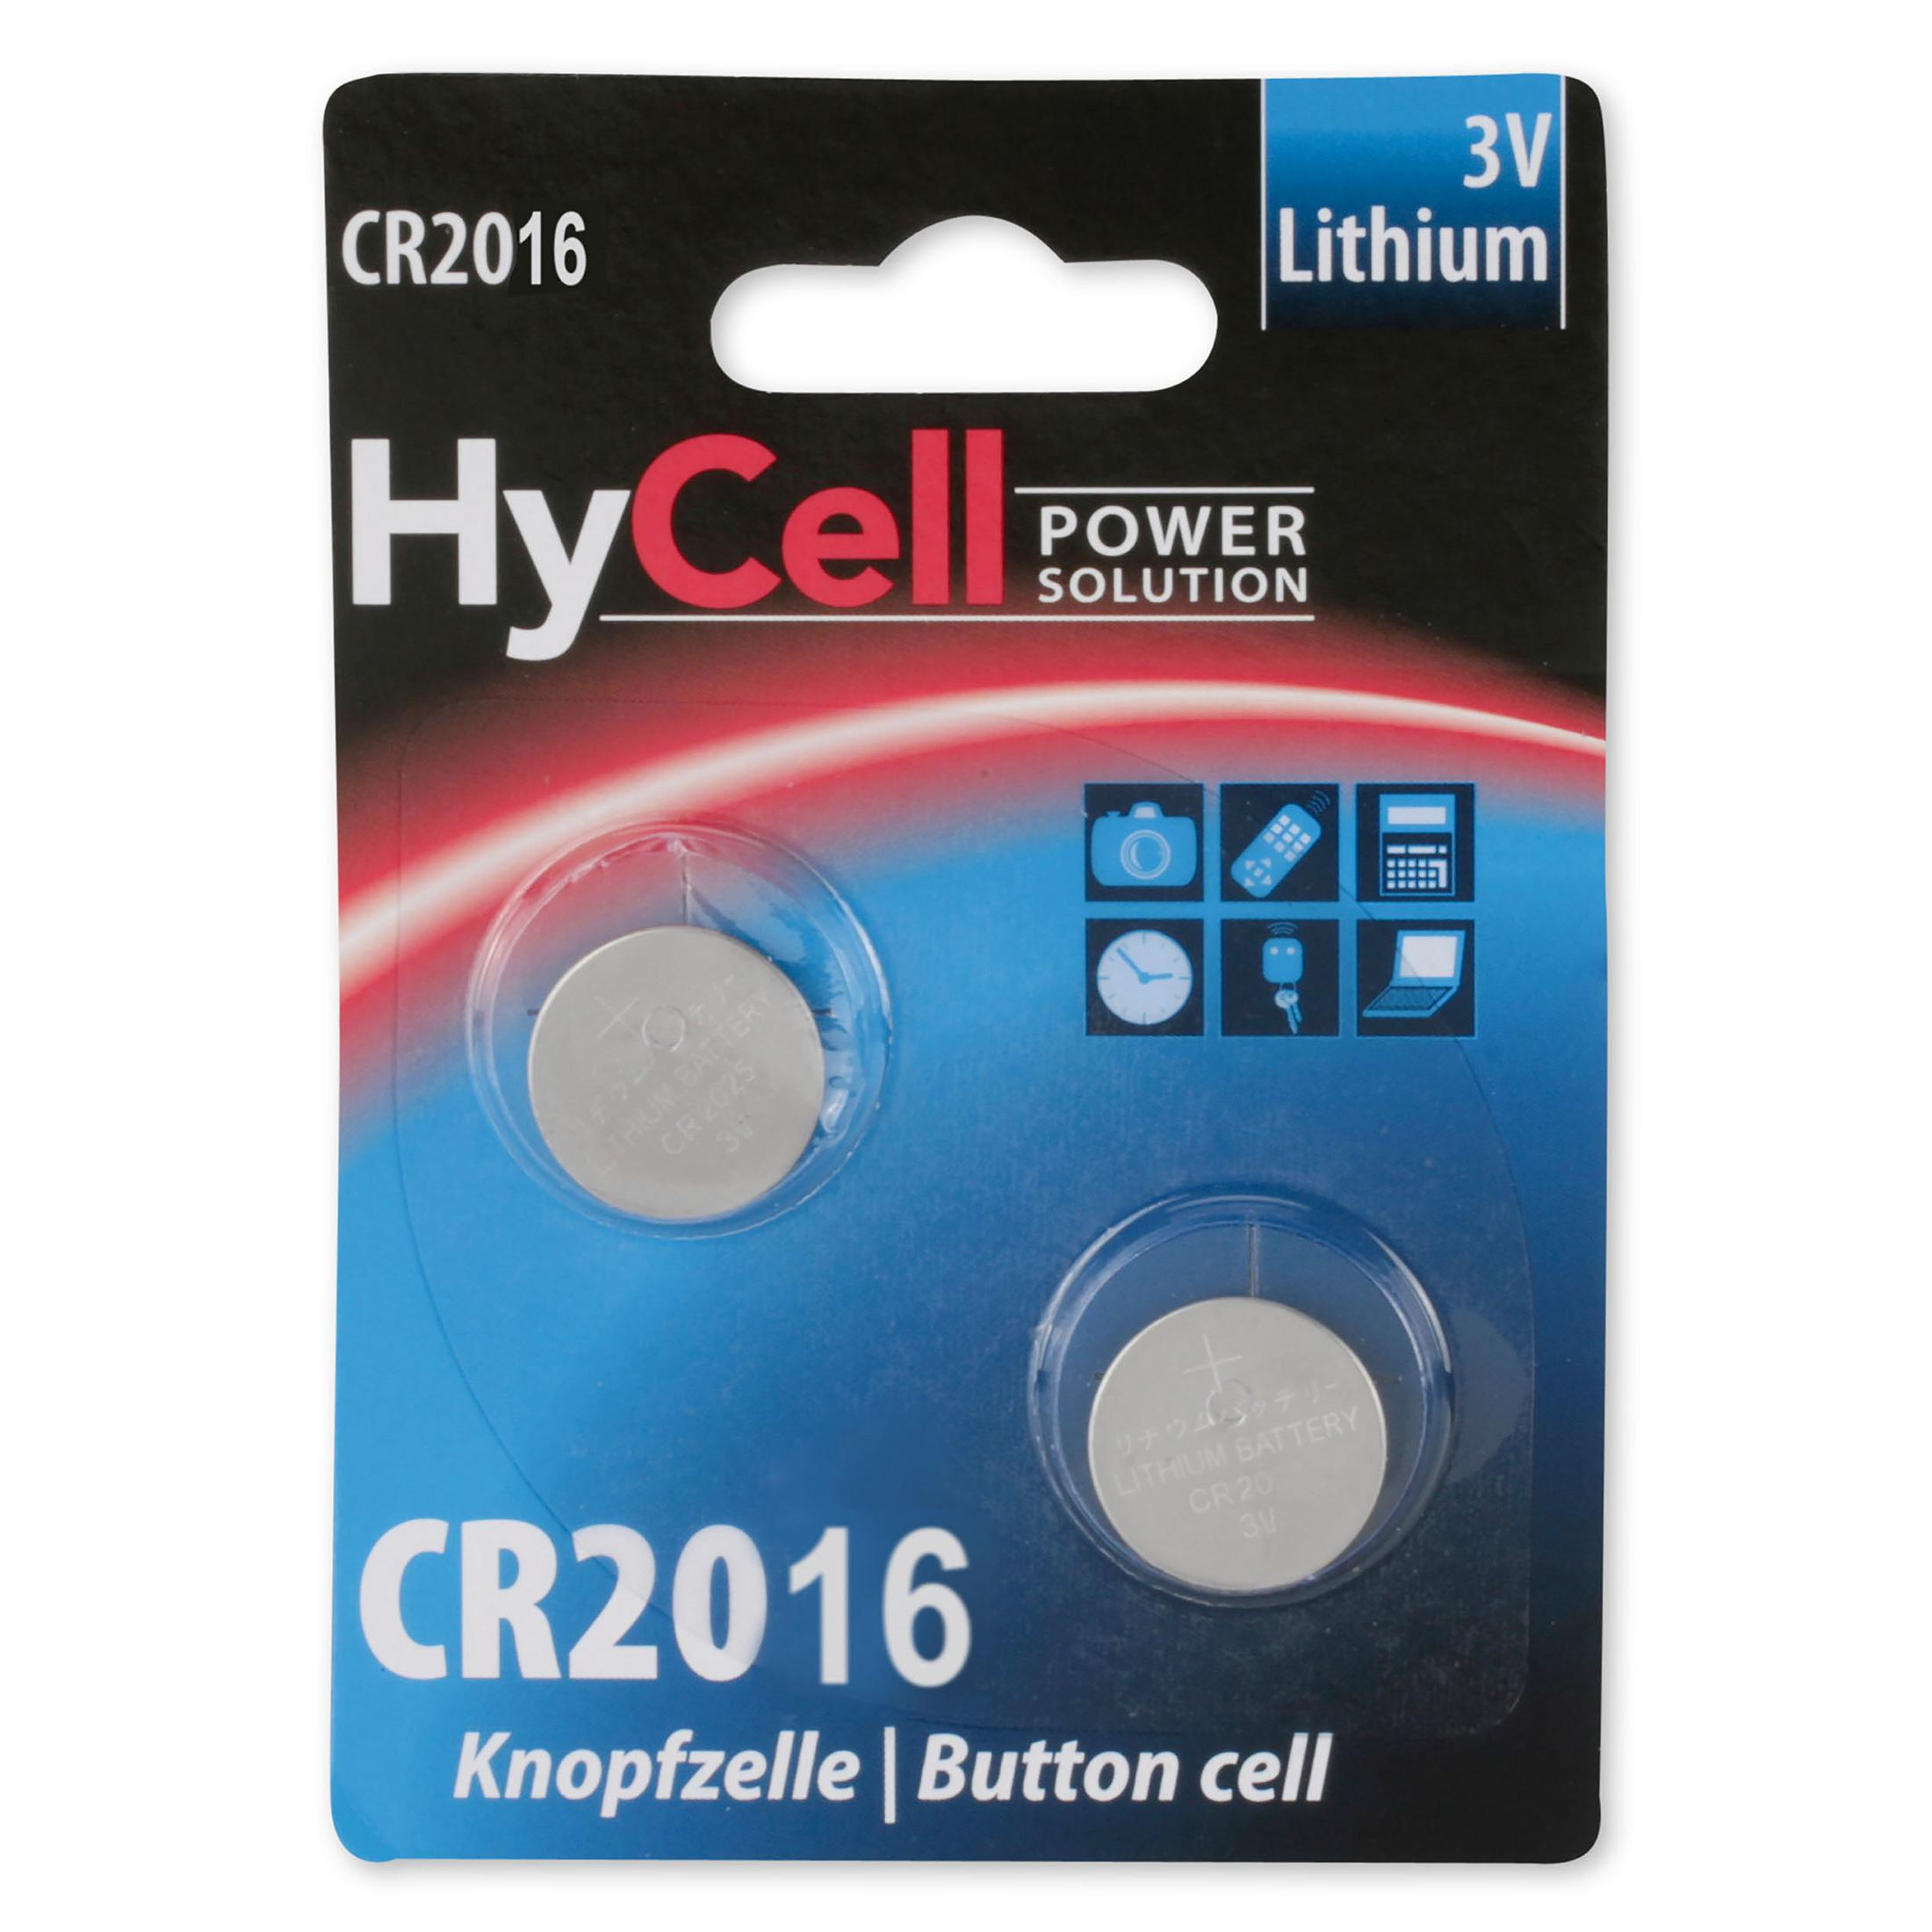 ANSMANN 5020182 CR 3 2-ER Volt 2 Knopfzelle, BLISTER HYCELL Lithium, 2016 Stück CR2016